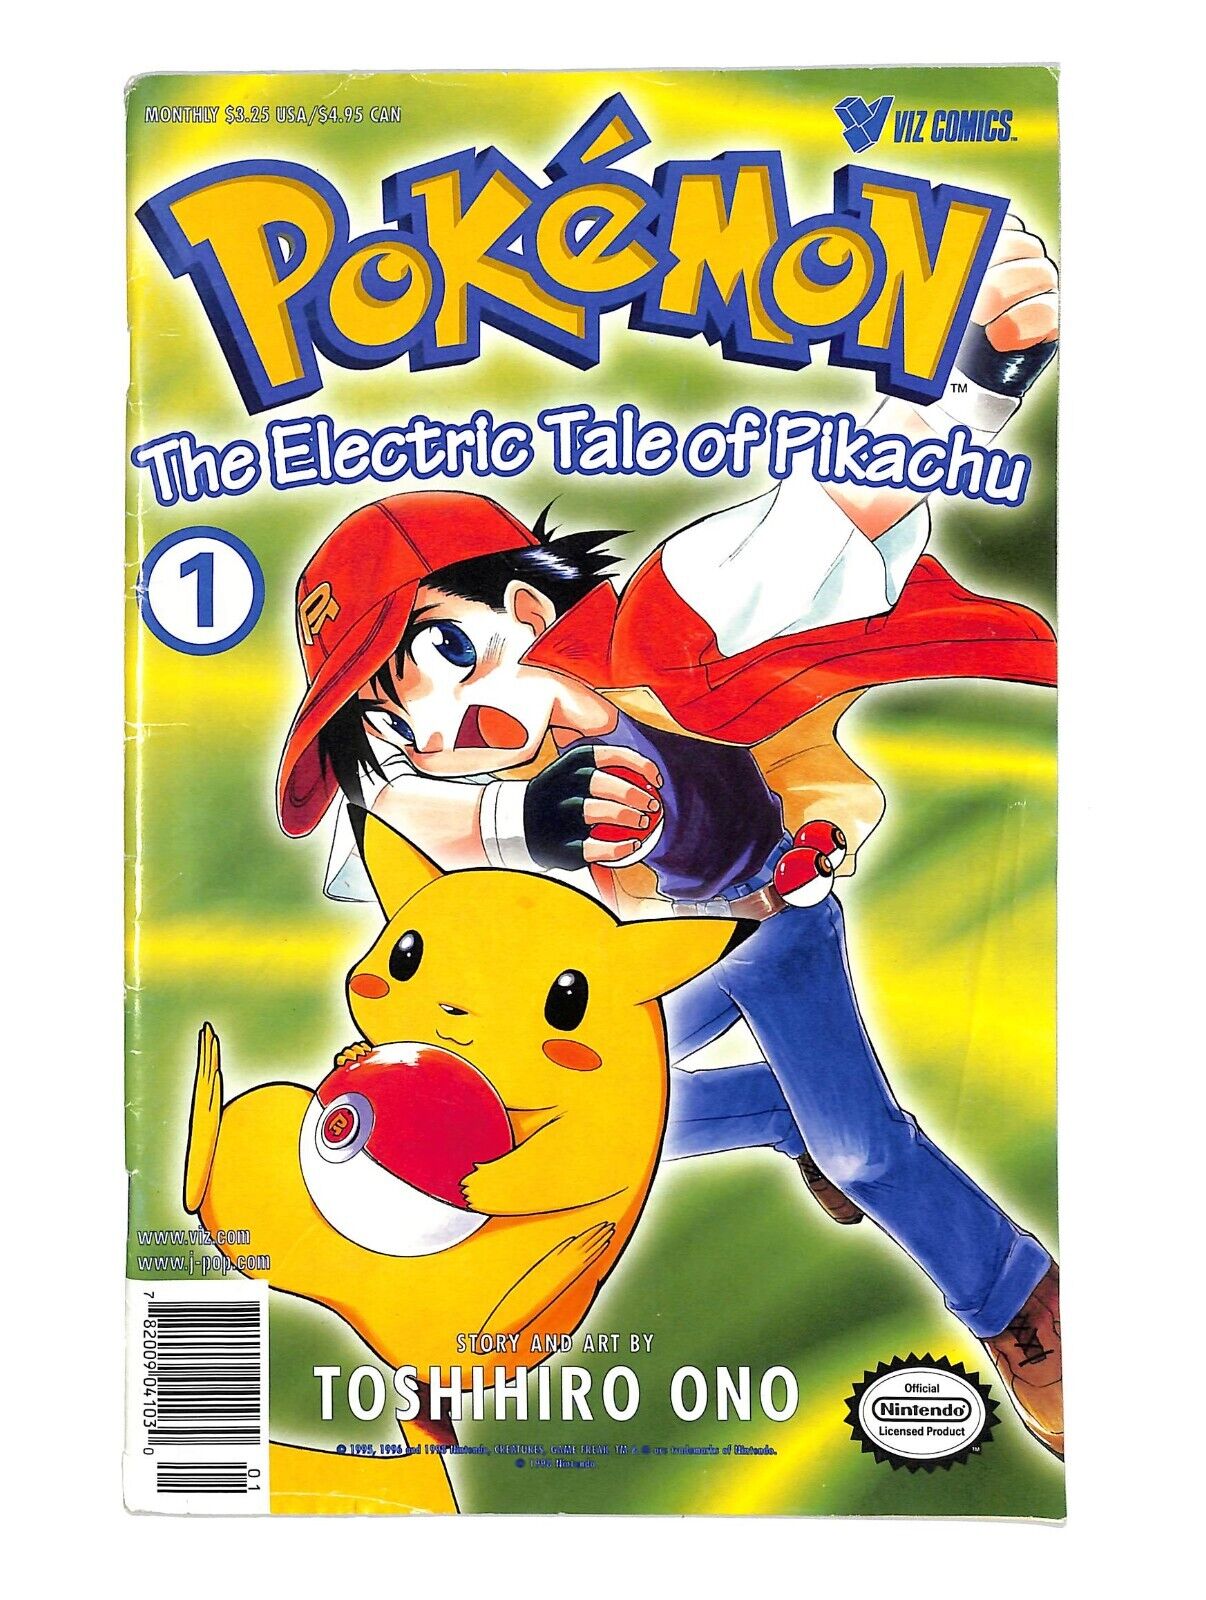 Pokemon The Electric Tale of Pikachu 1 Viz Comics 1999 4th Print